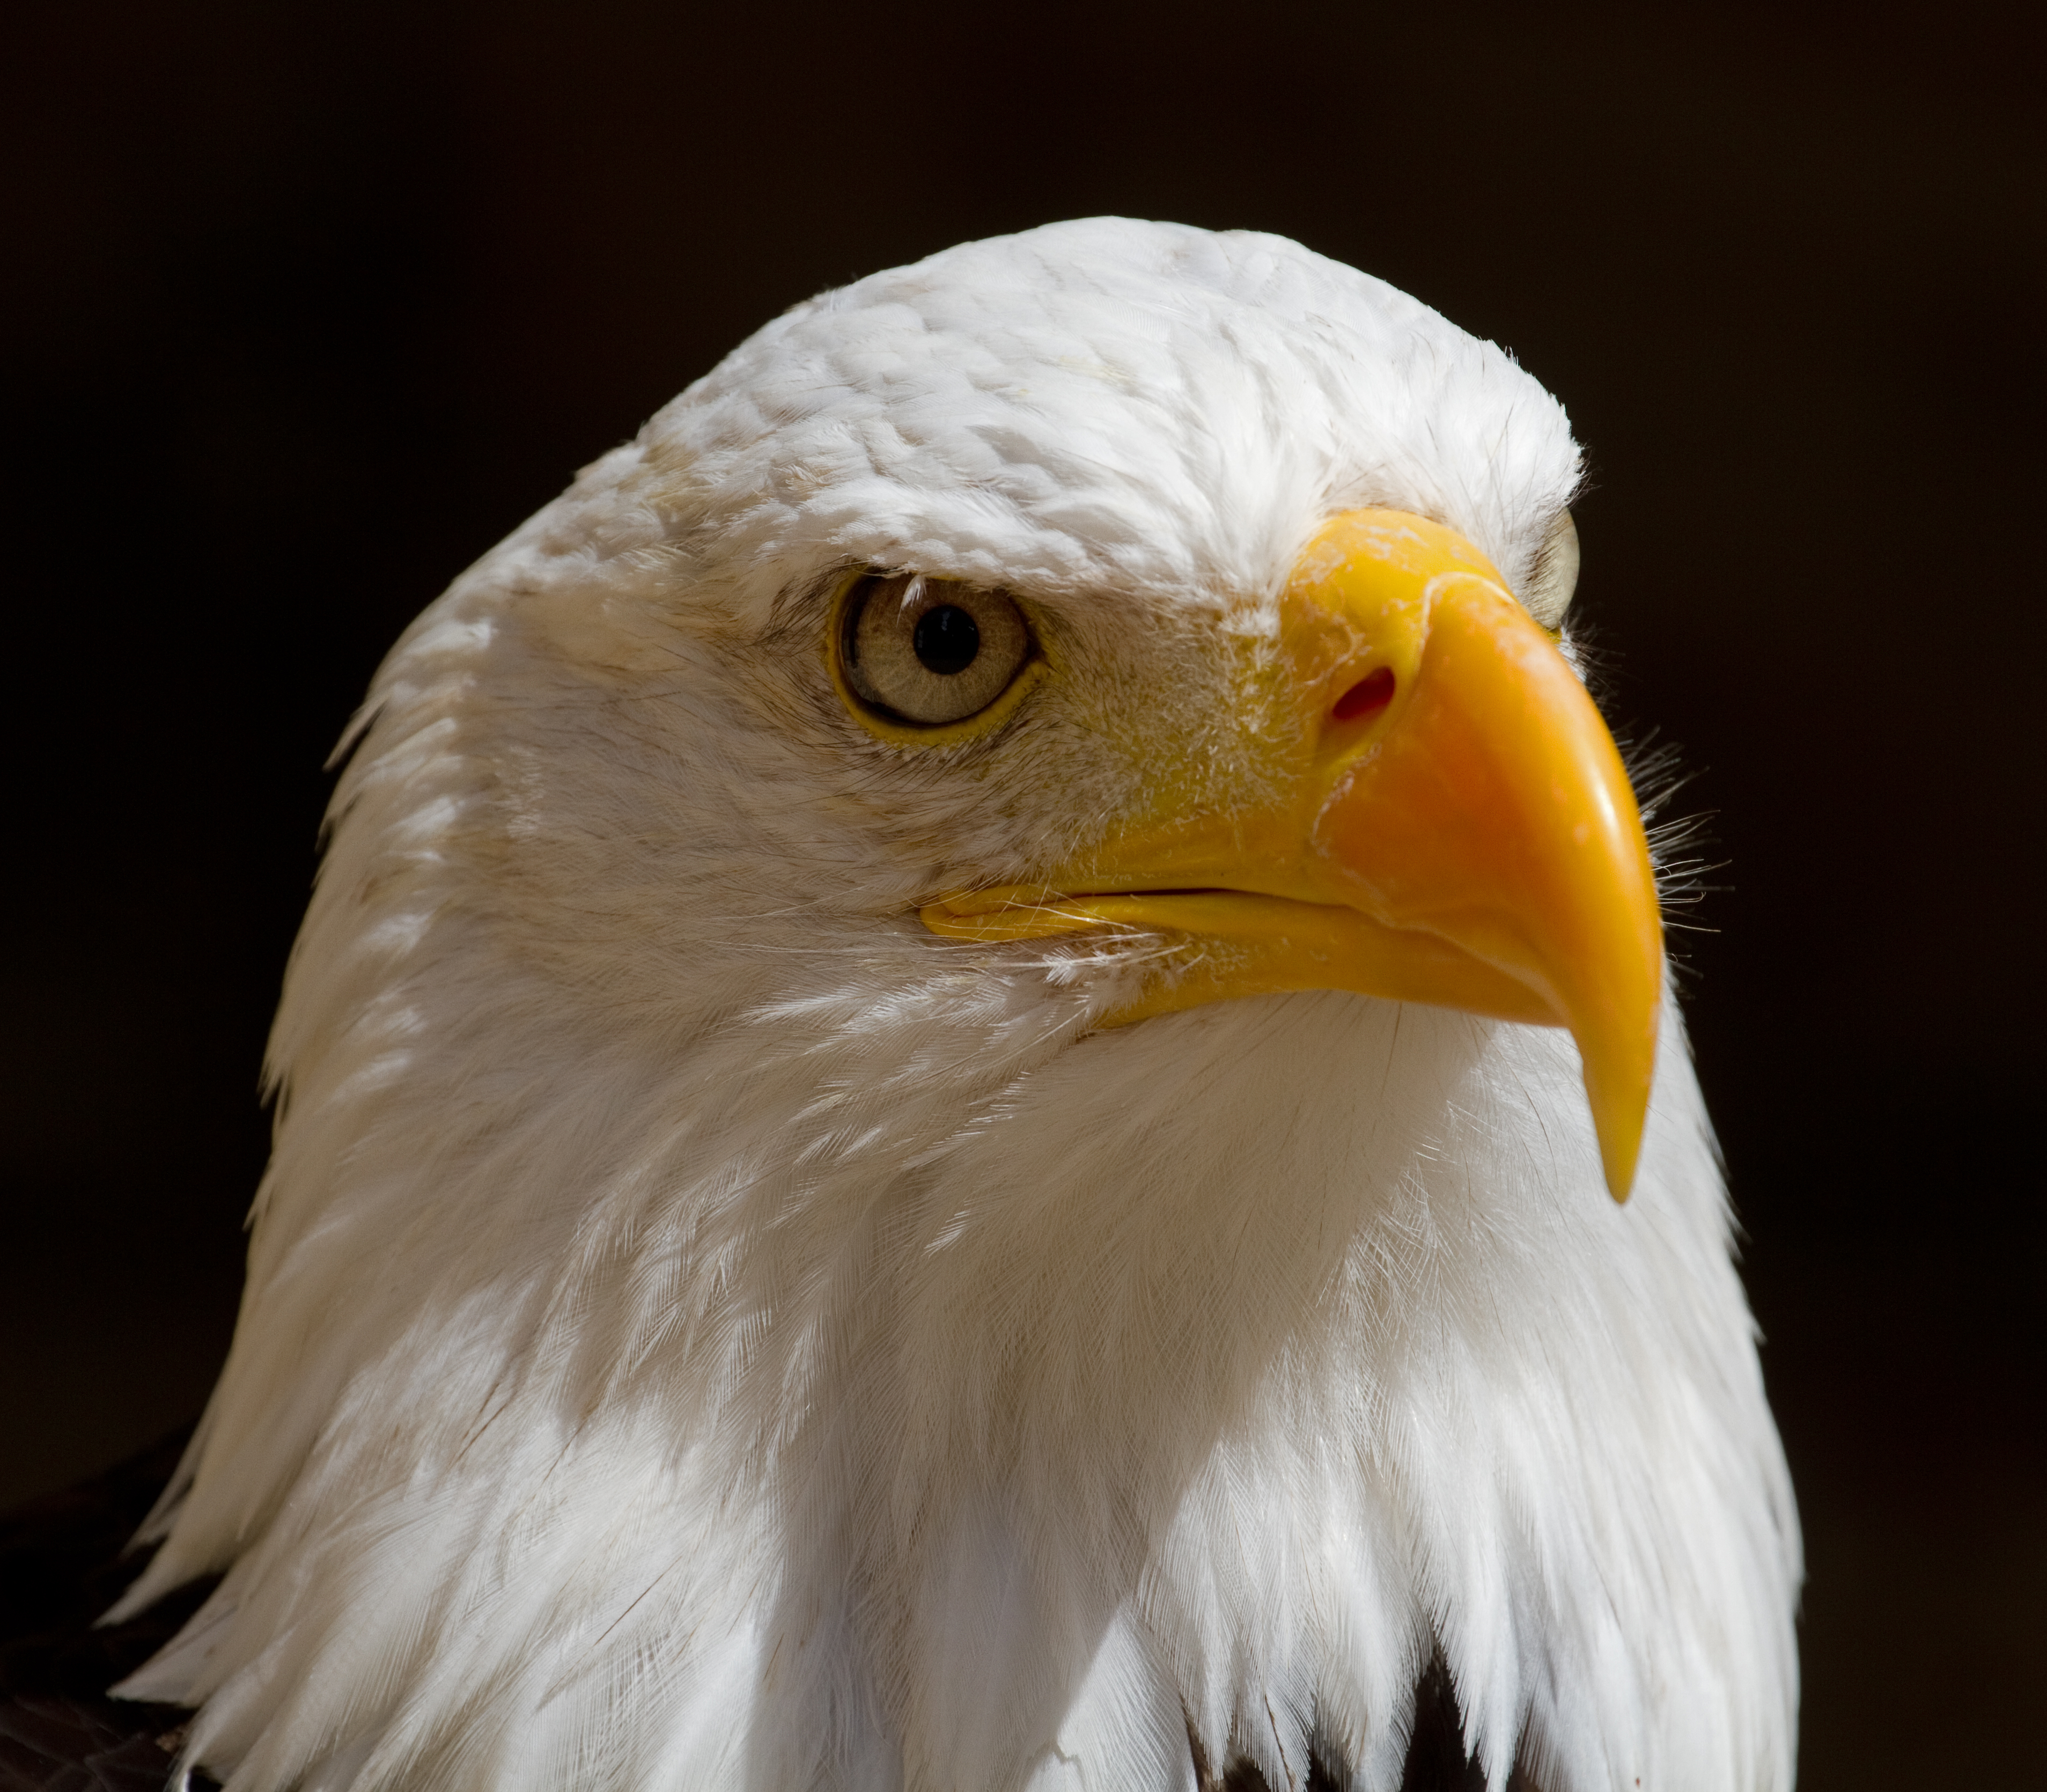 File:Bald Eagle Head (6019417016).jpg - Wikimedia Commons